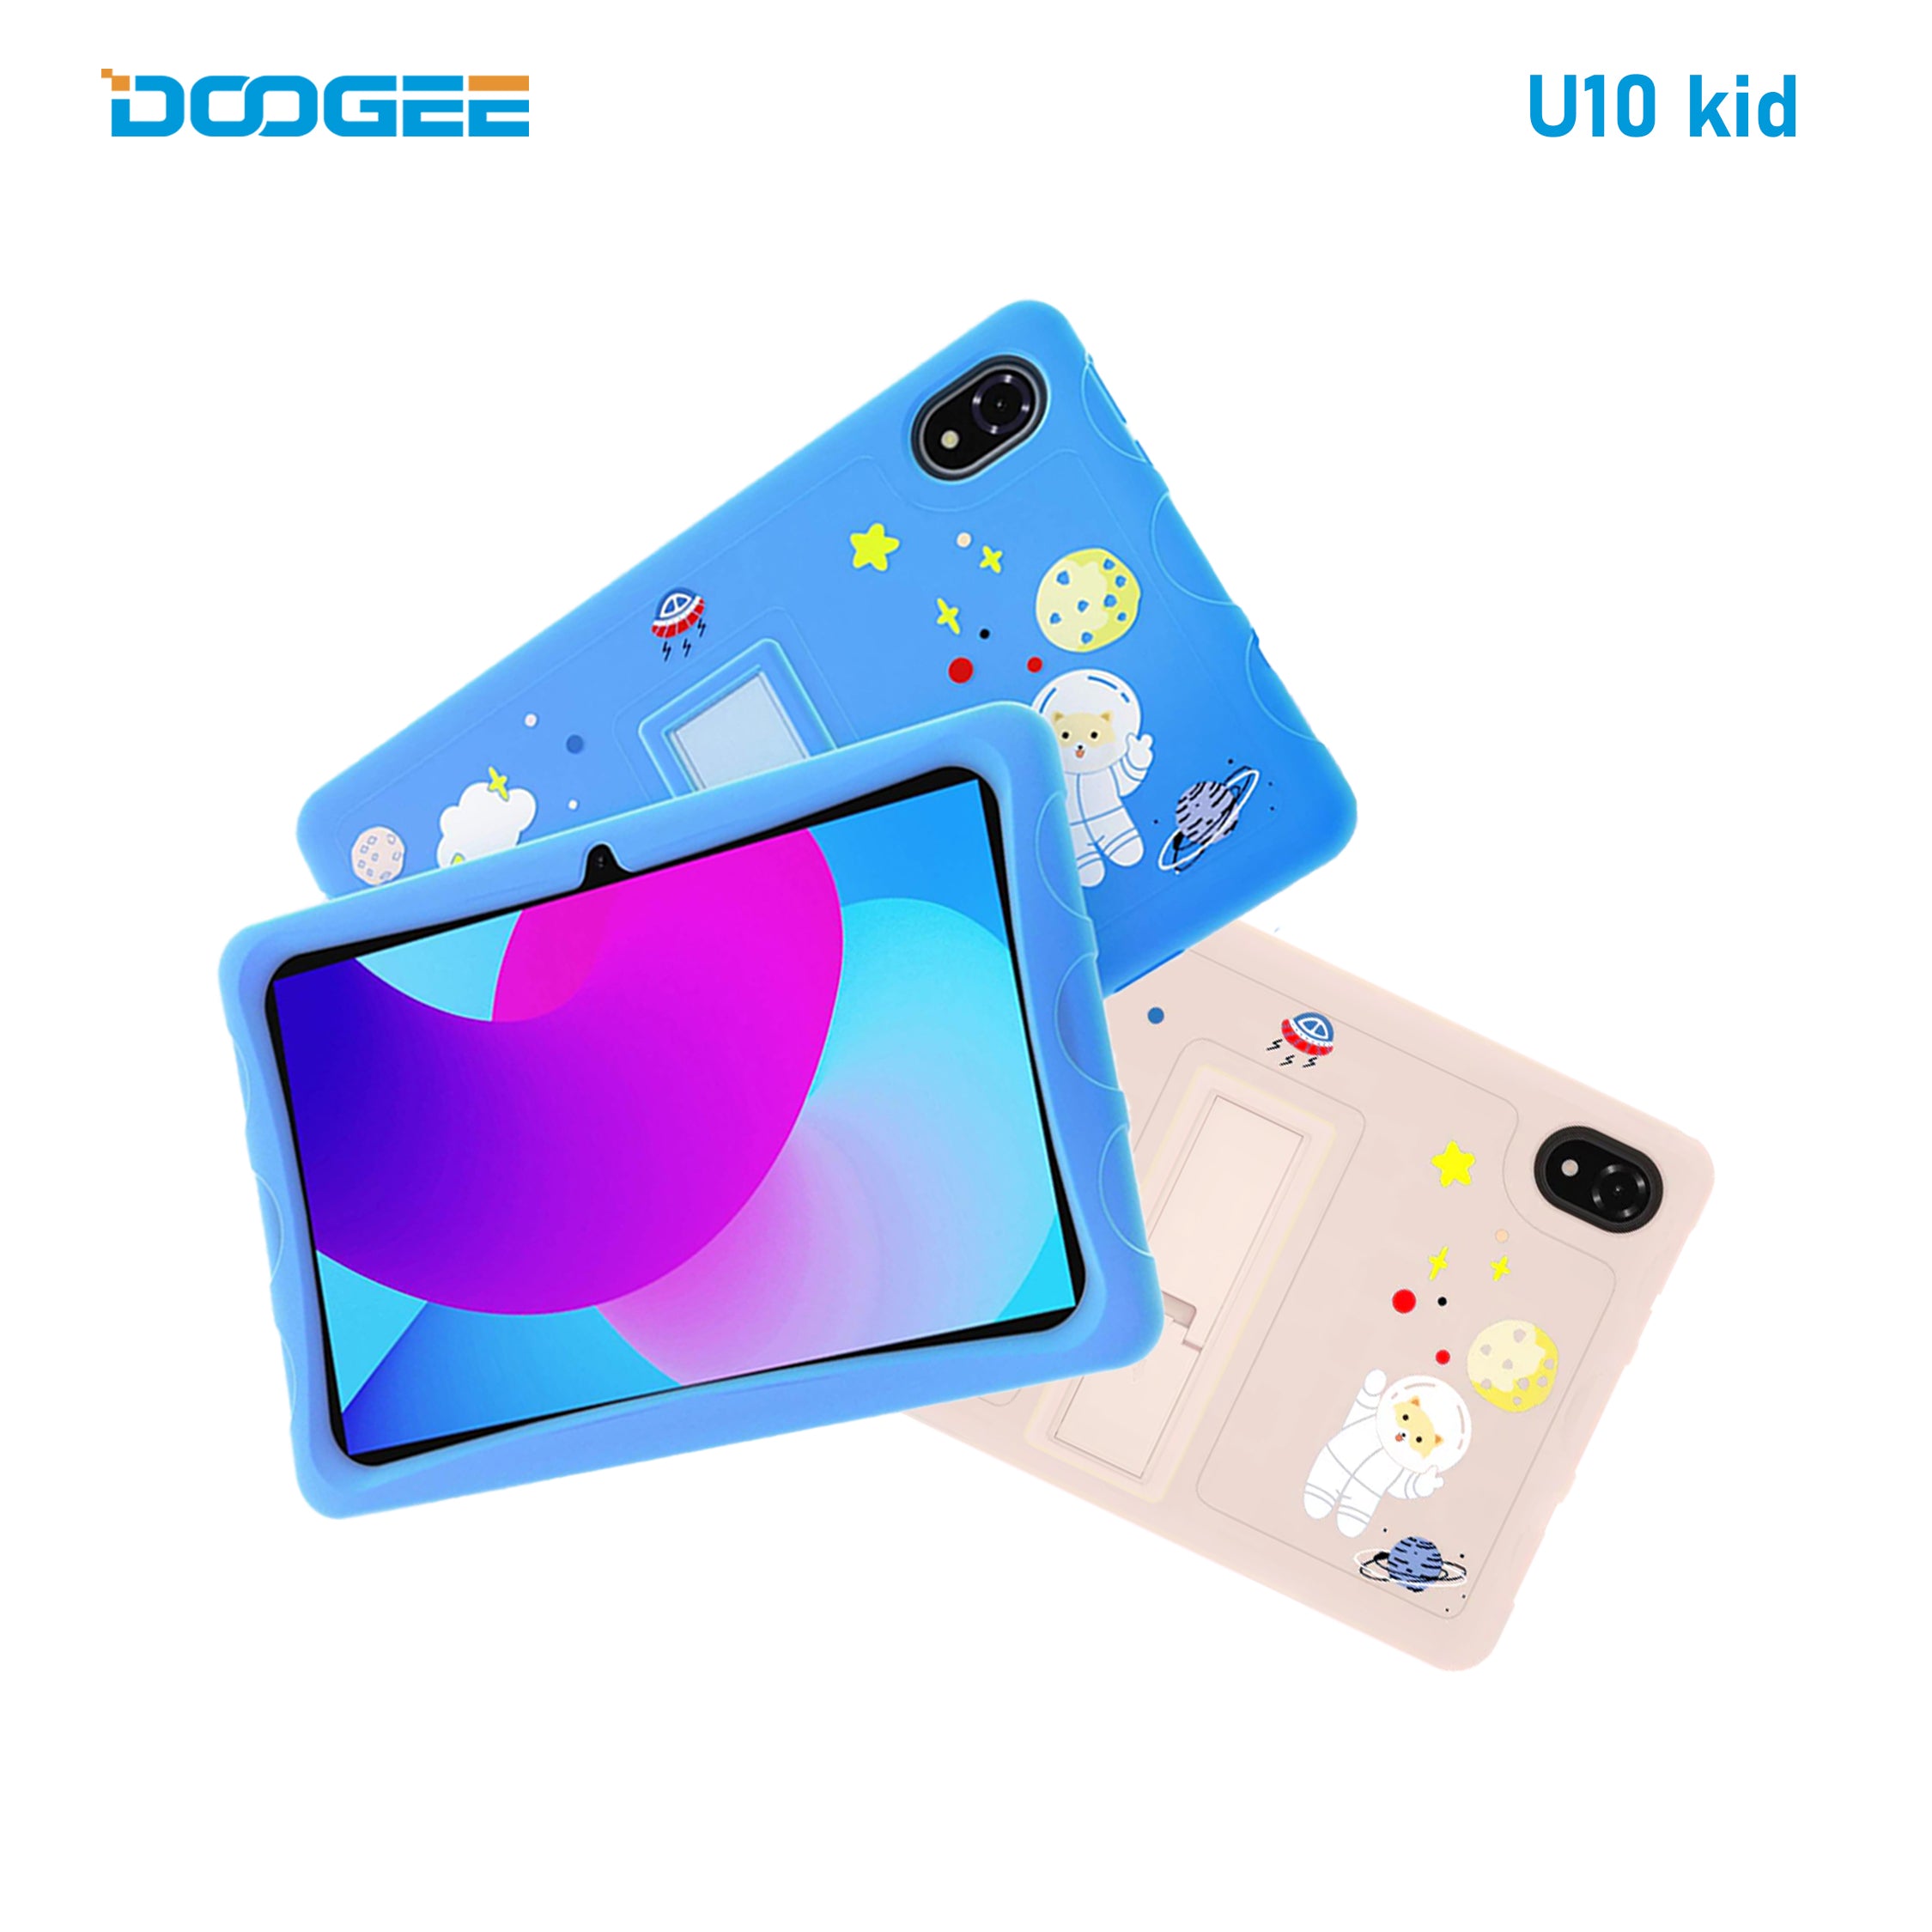 Doogee Tablet U10 Kid